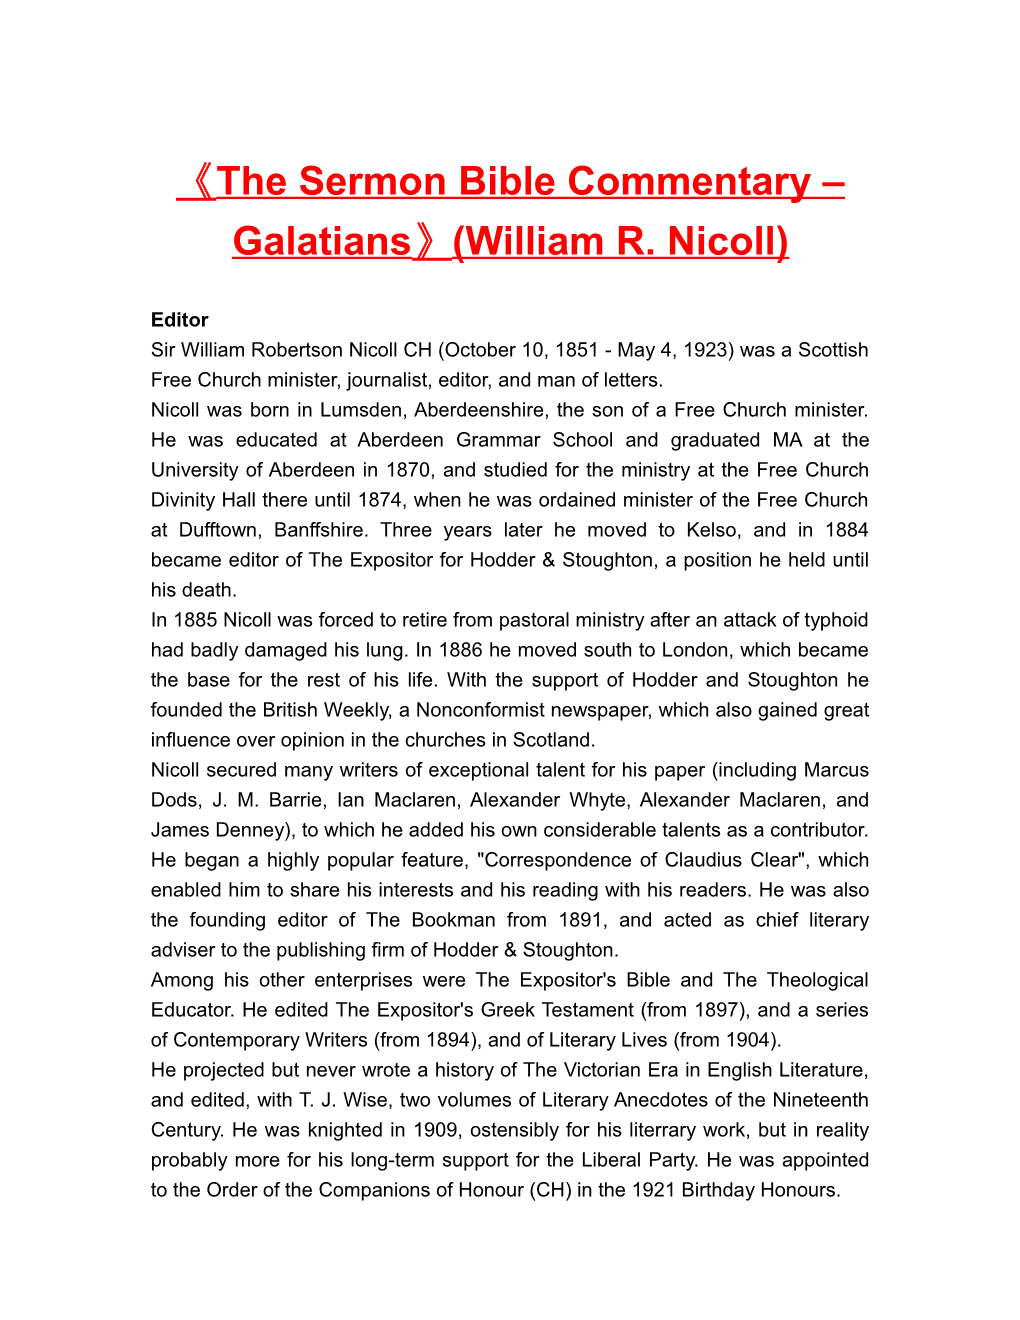 The Sermon Bible Commentary Galatians (William R. Nicoll)